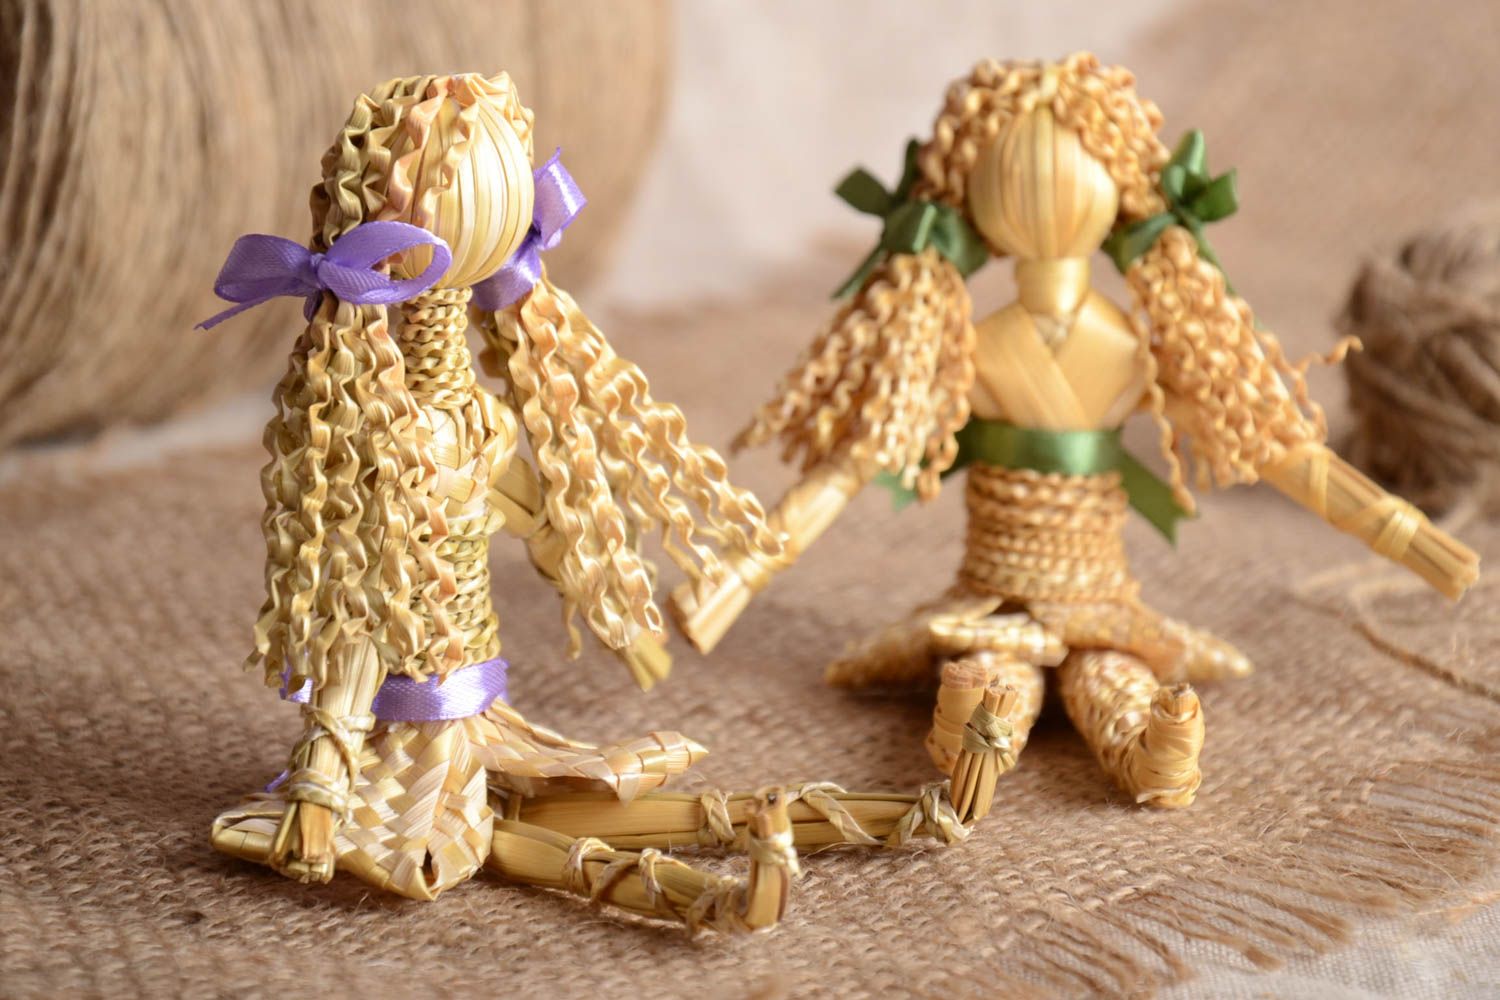 Woven handmade dolls unusual interior decor stylish toys made of straw 2 pieces photo 1